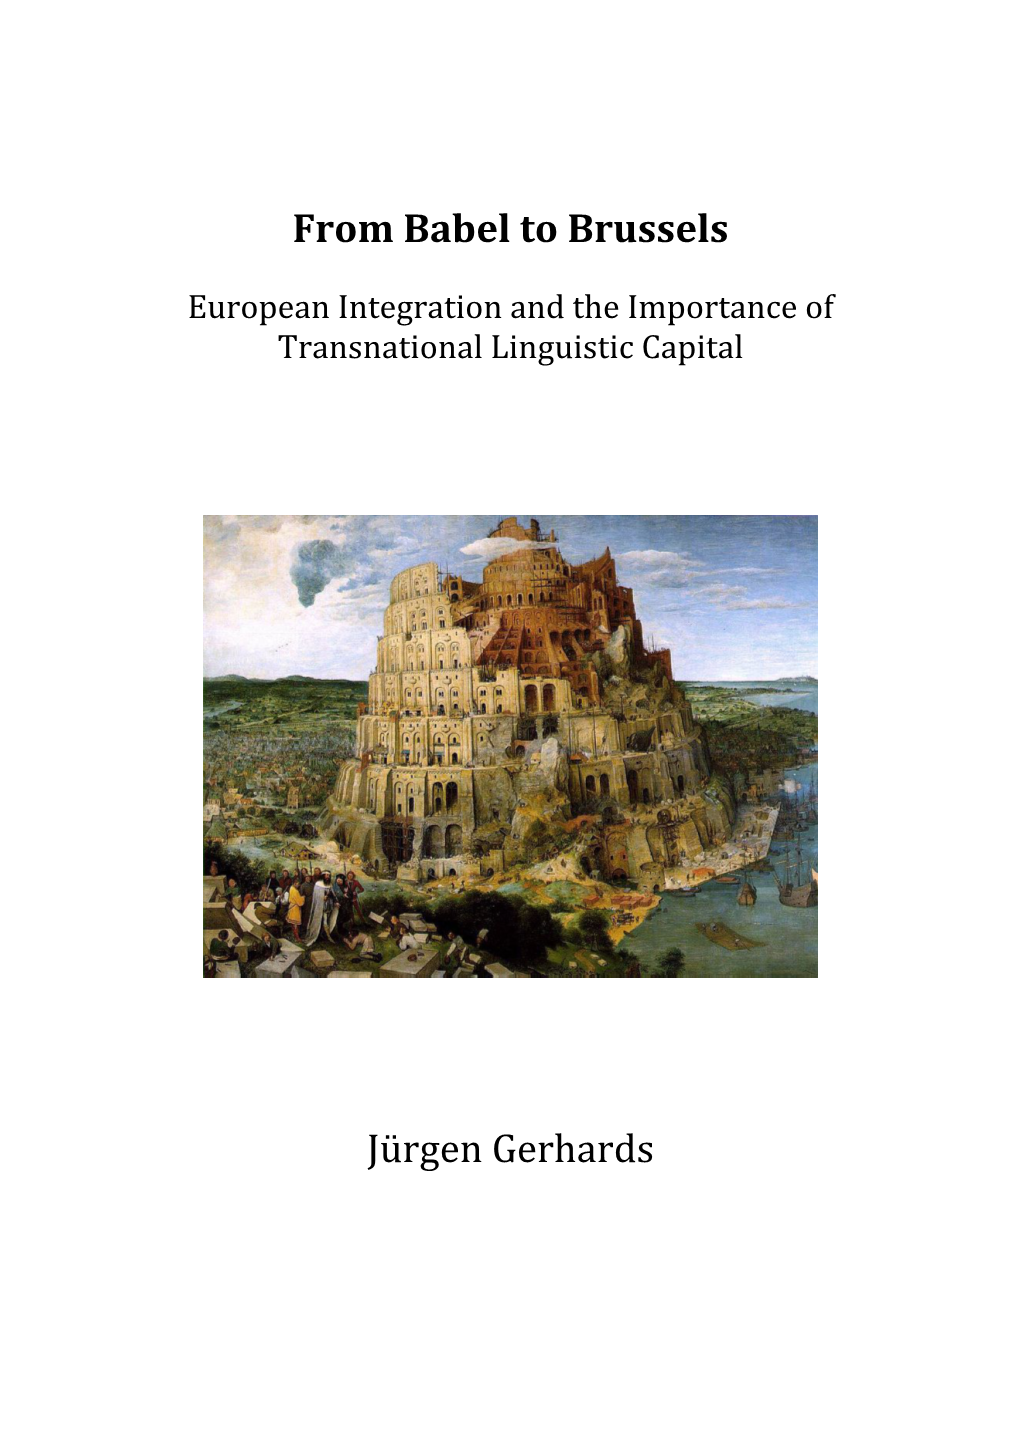 From Babel to Brussels Jürgen Gerhards